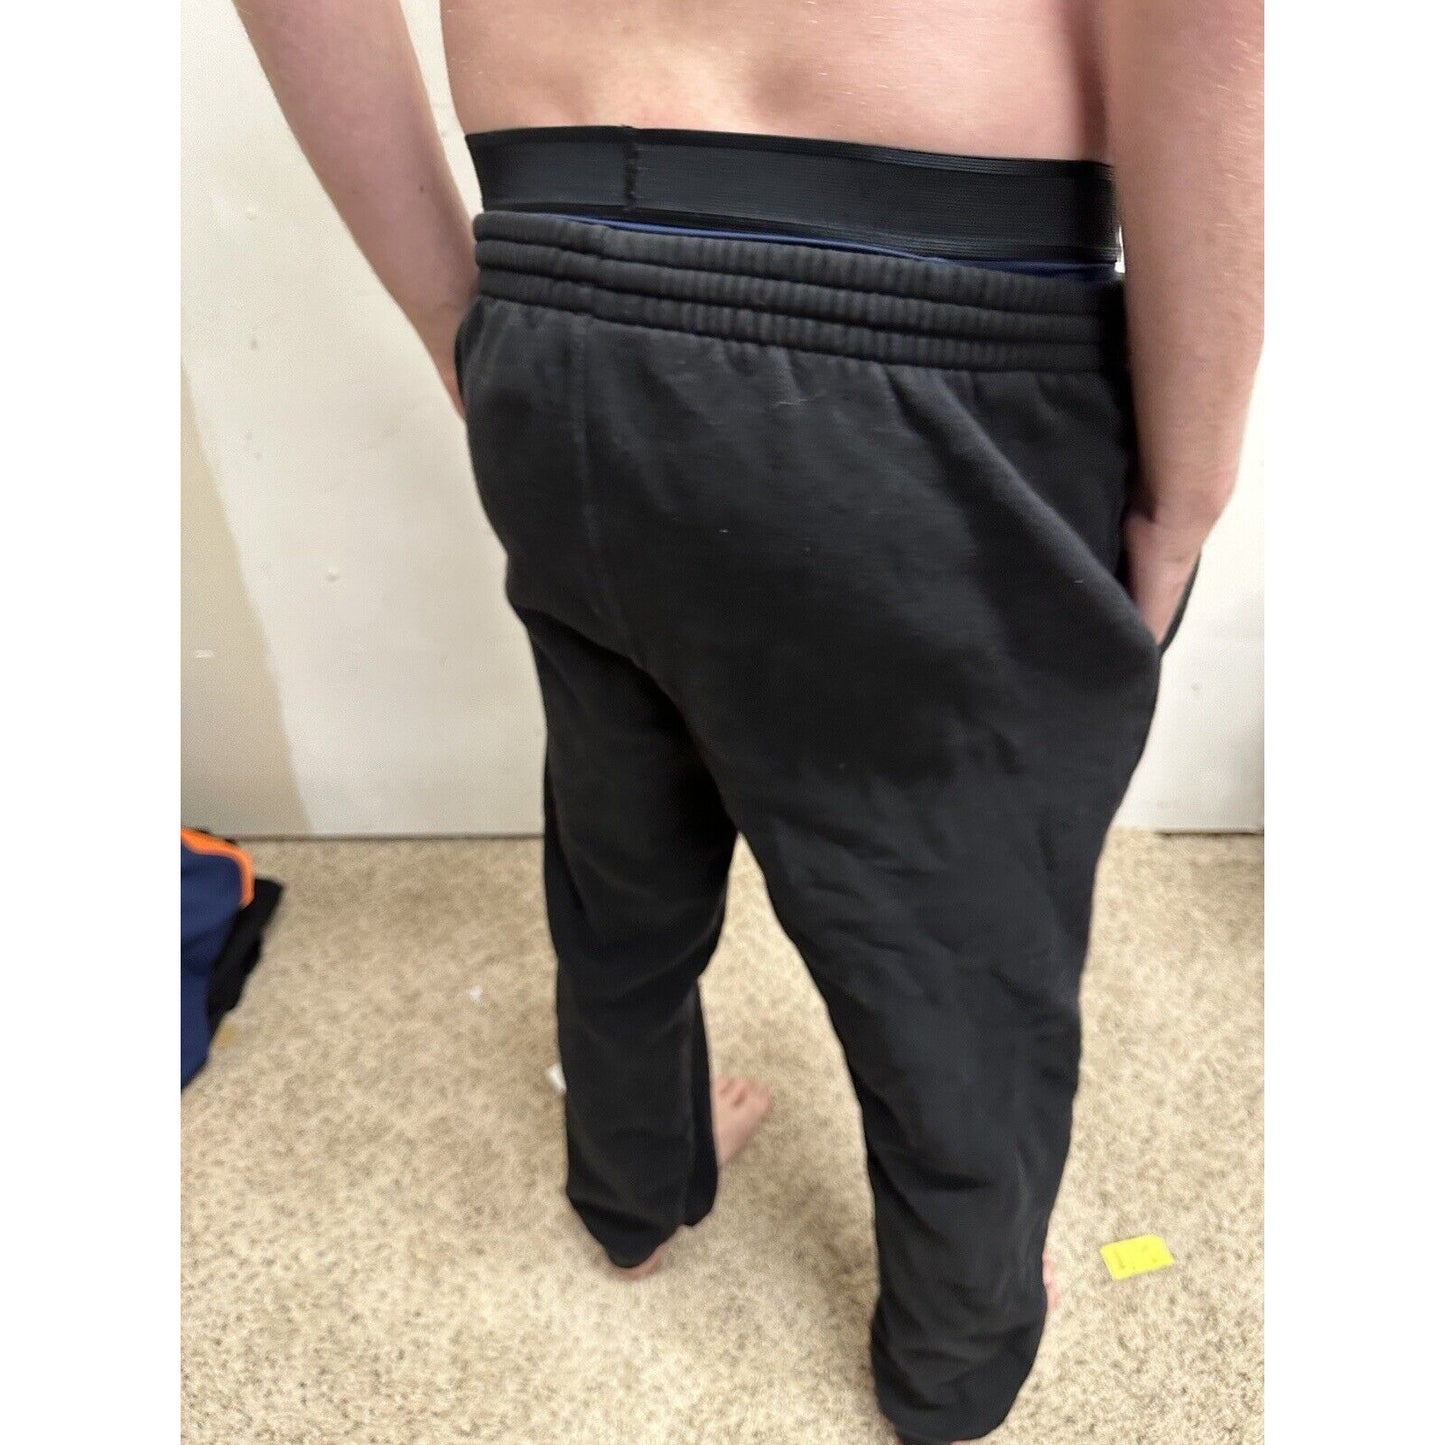 men’s black fila medium sweat pants with pockets